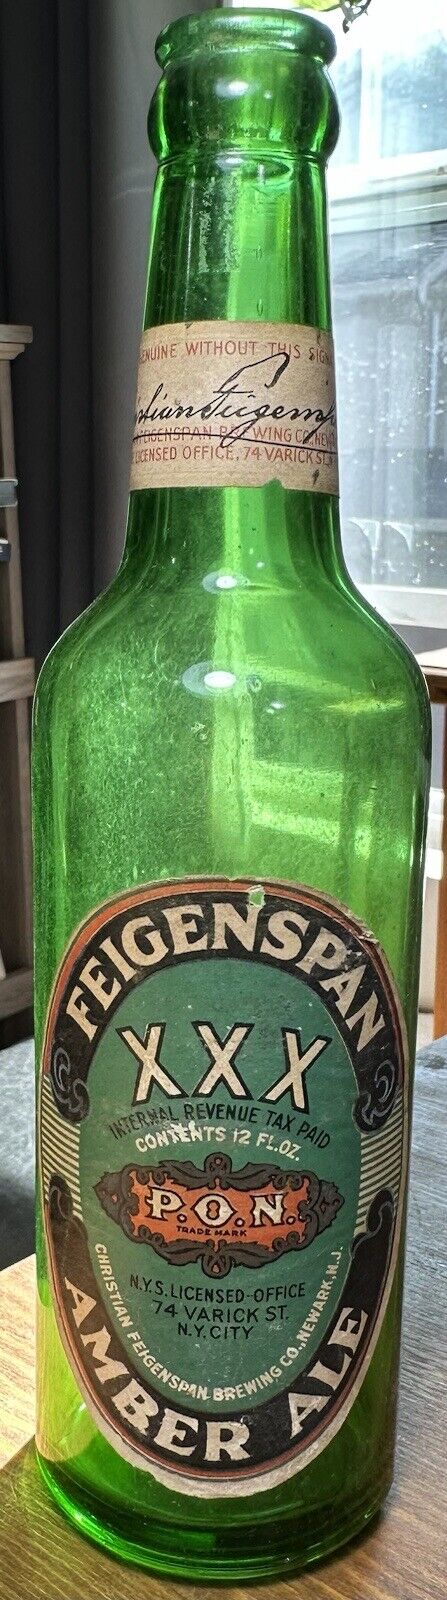 1930s Feigenspan Amber Ale Beer Bottle P.O.N. Newark  New Jersey 12oz IRTP Green